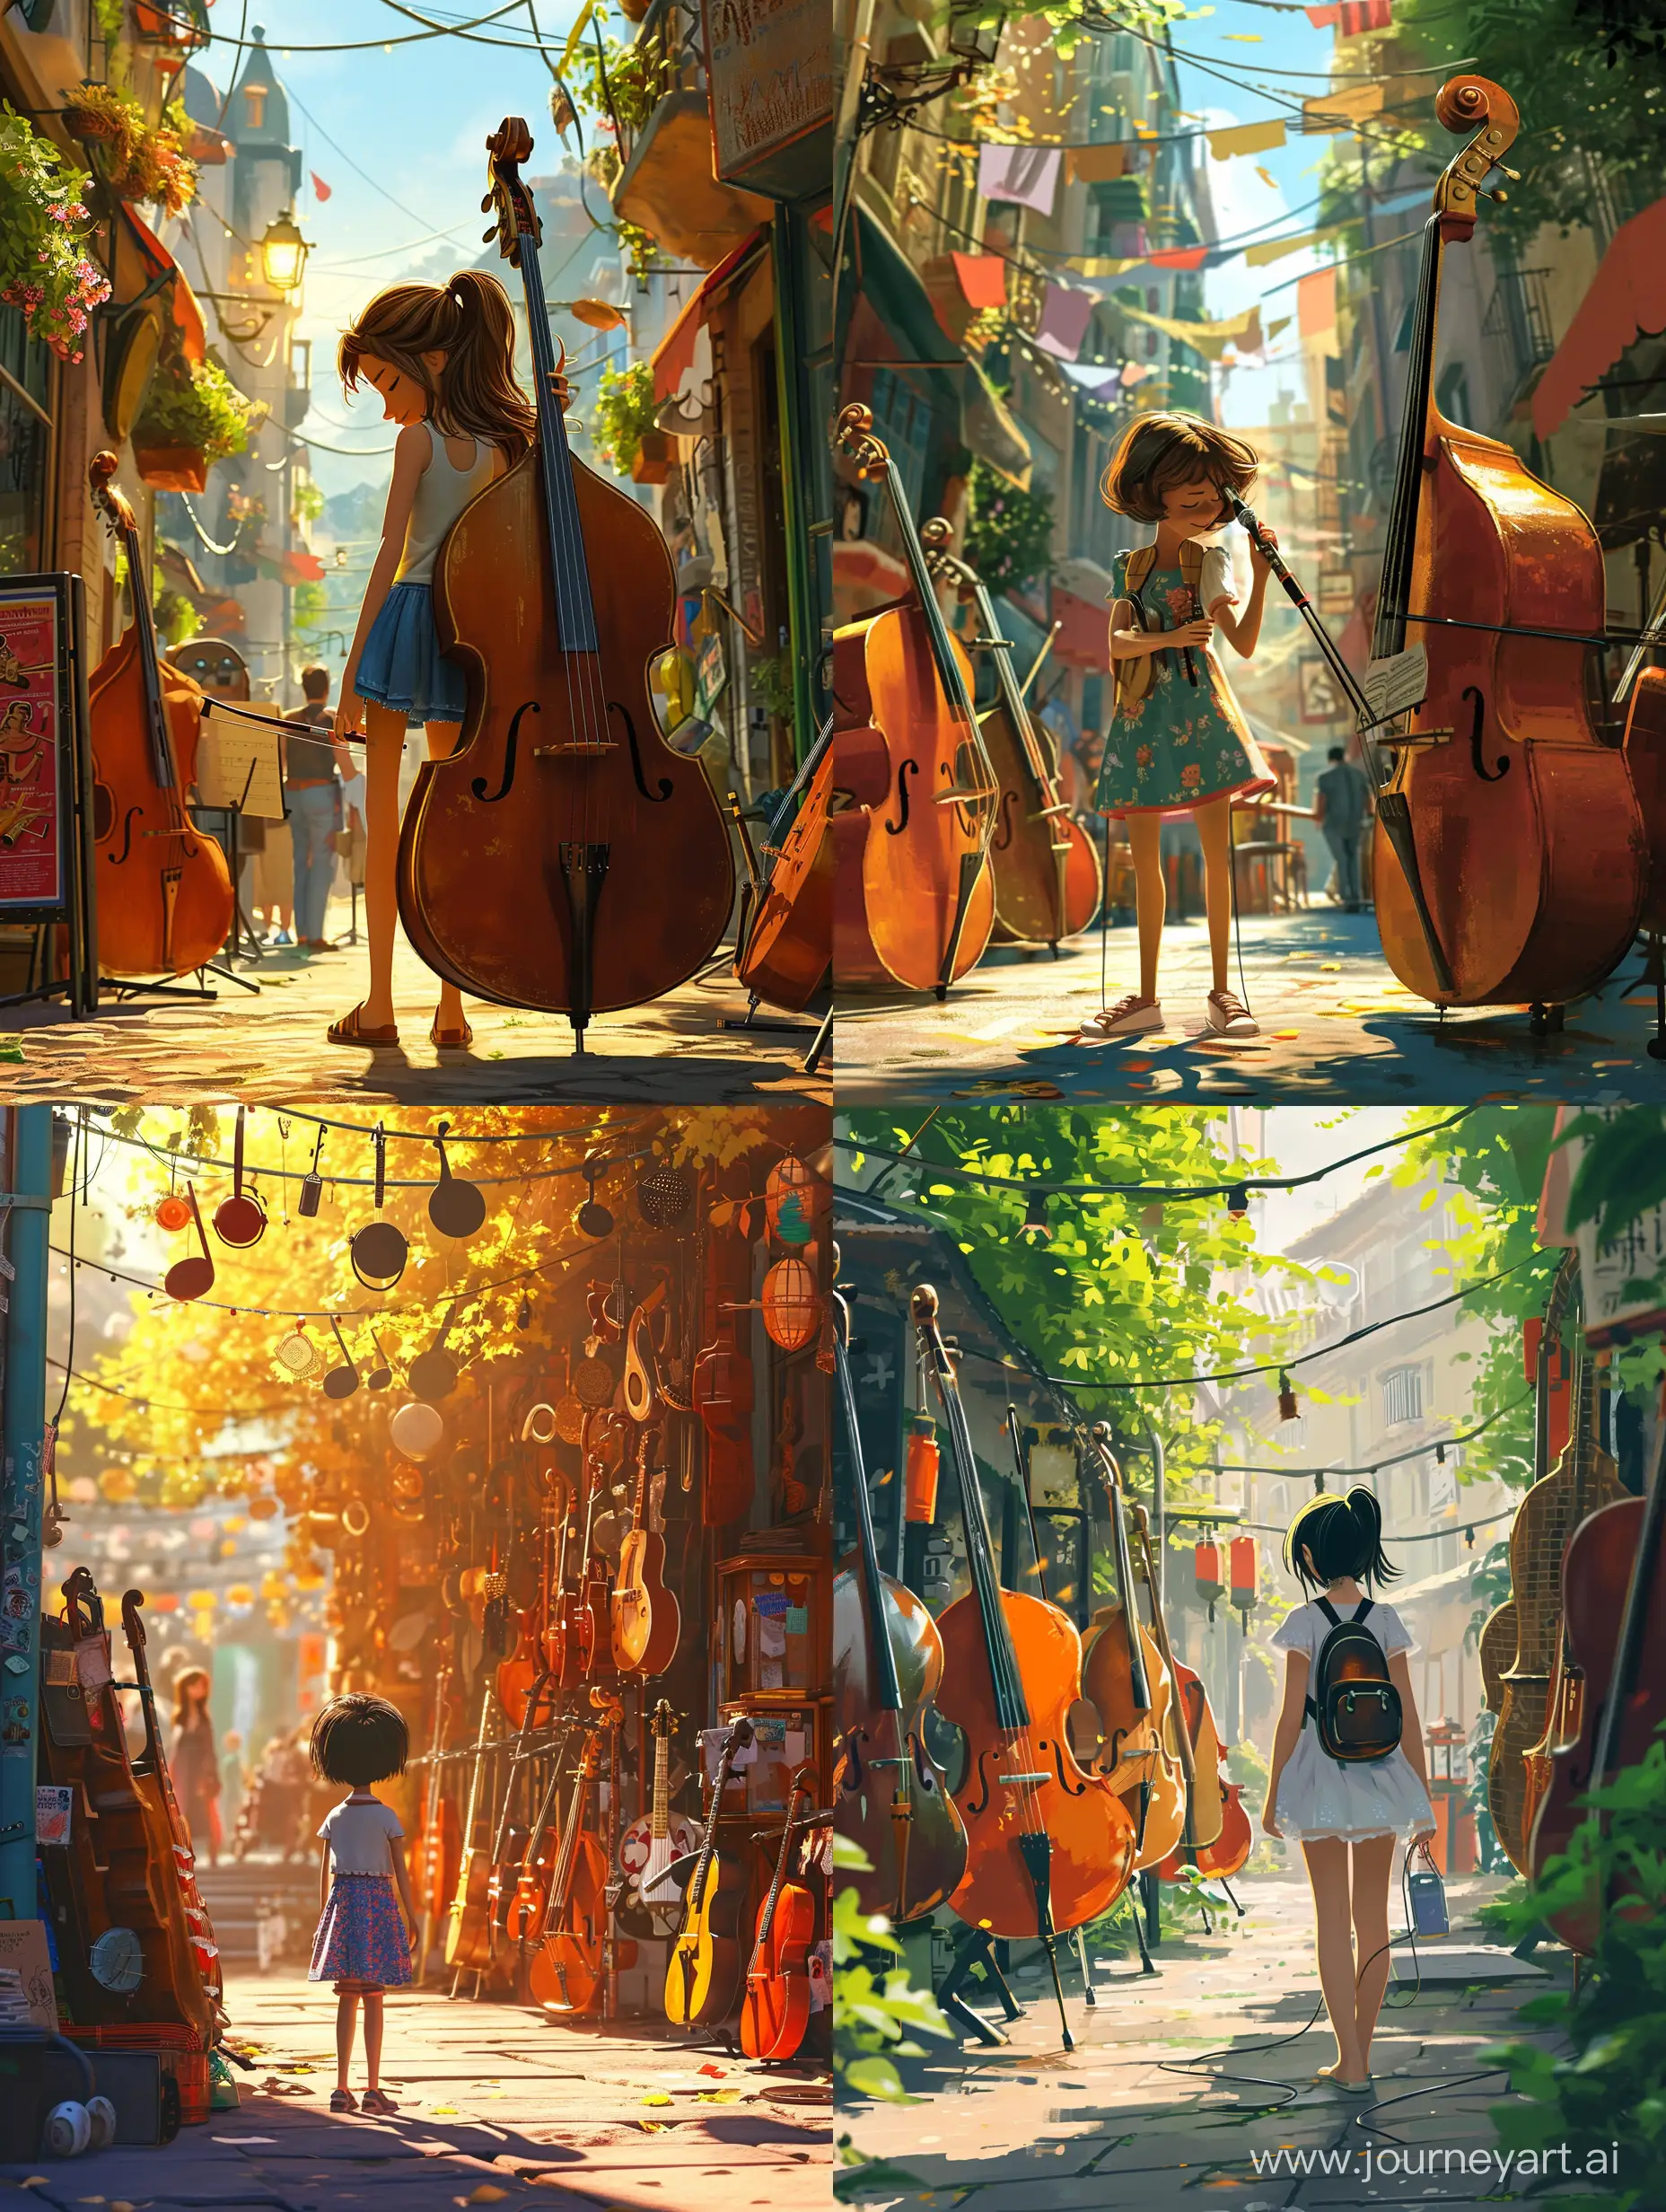 Joyful-Girl-Playing-Musical-Instruments-on-a-Sunny-Street-Pixar-Style